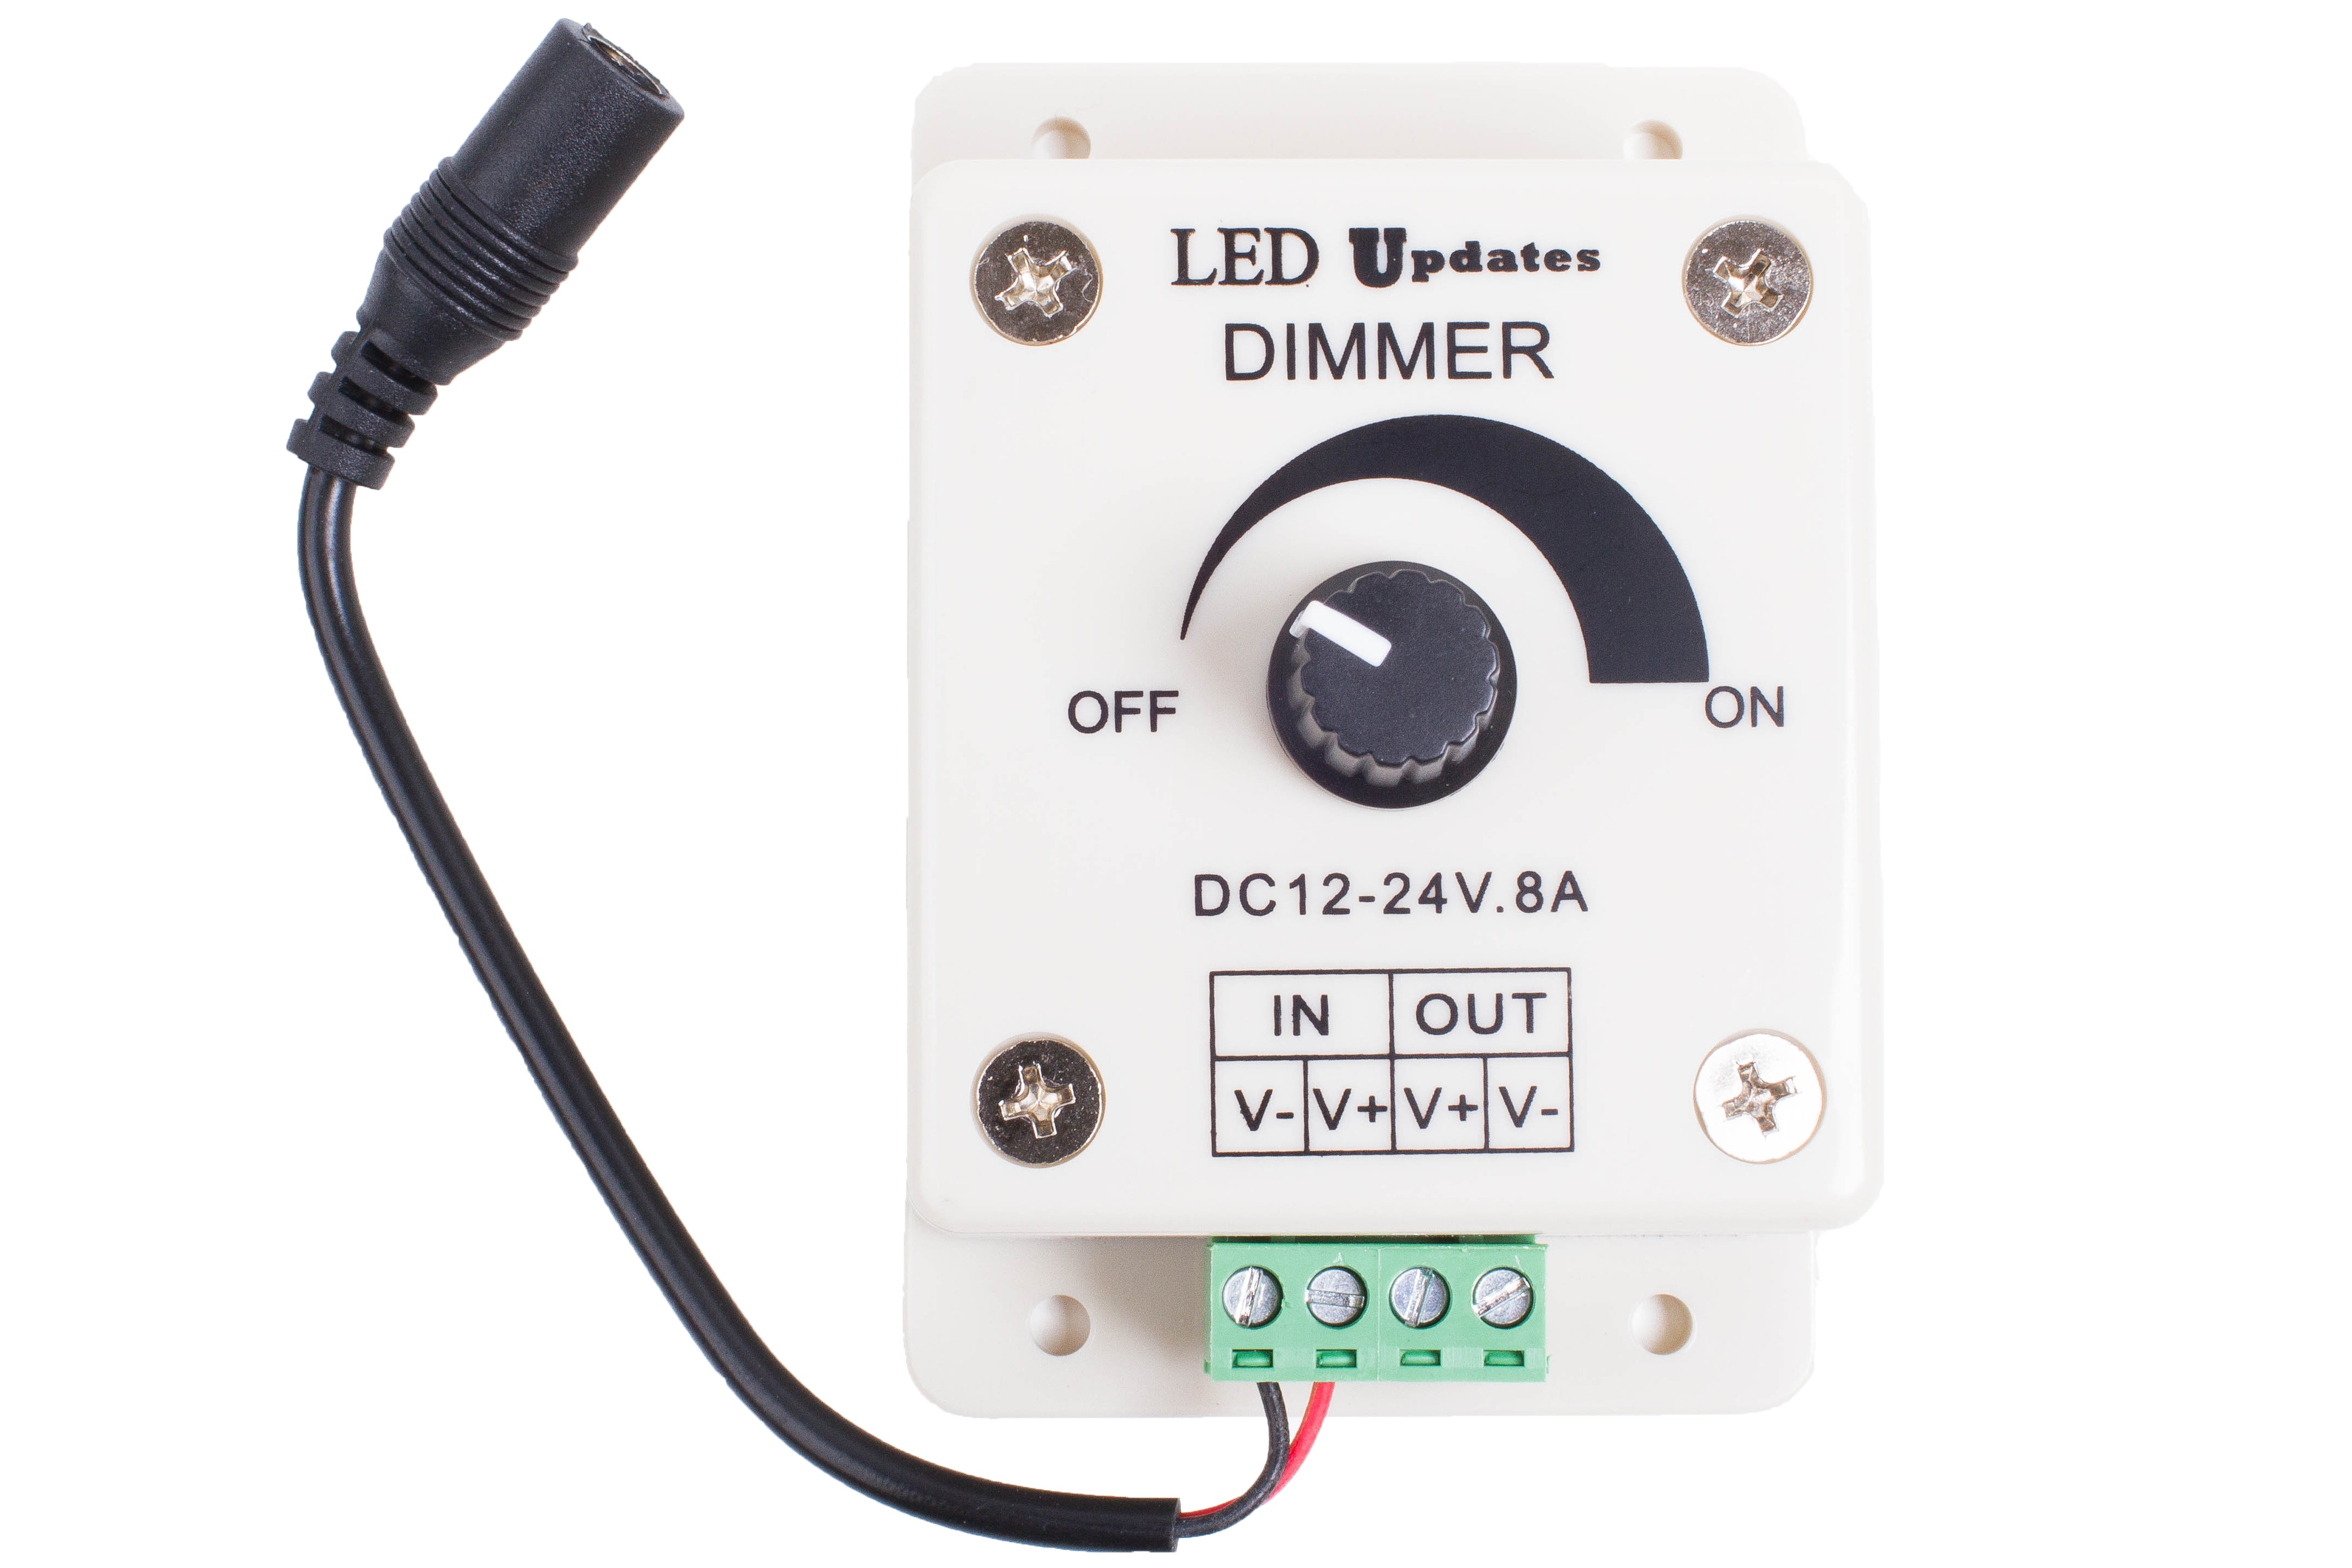 Single color LED light dimmer switch | LEDUpdates